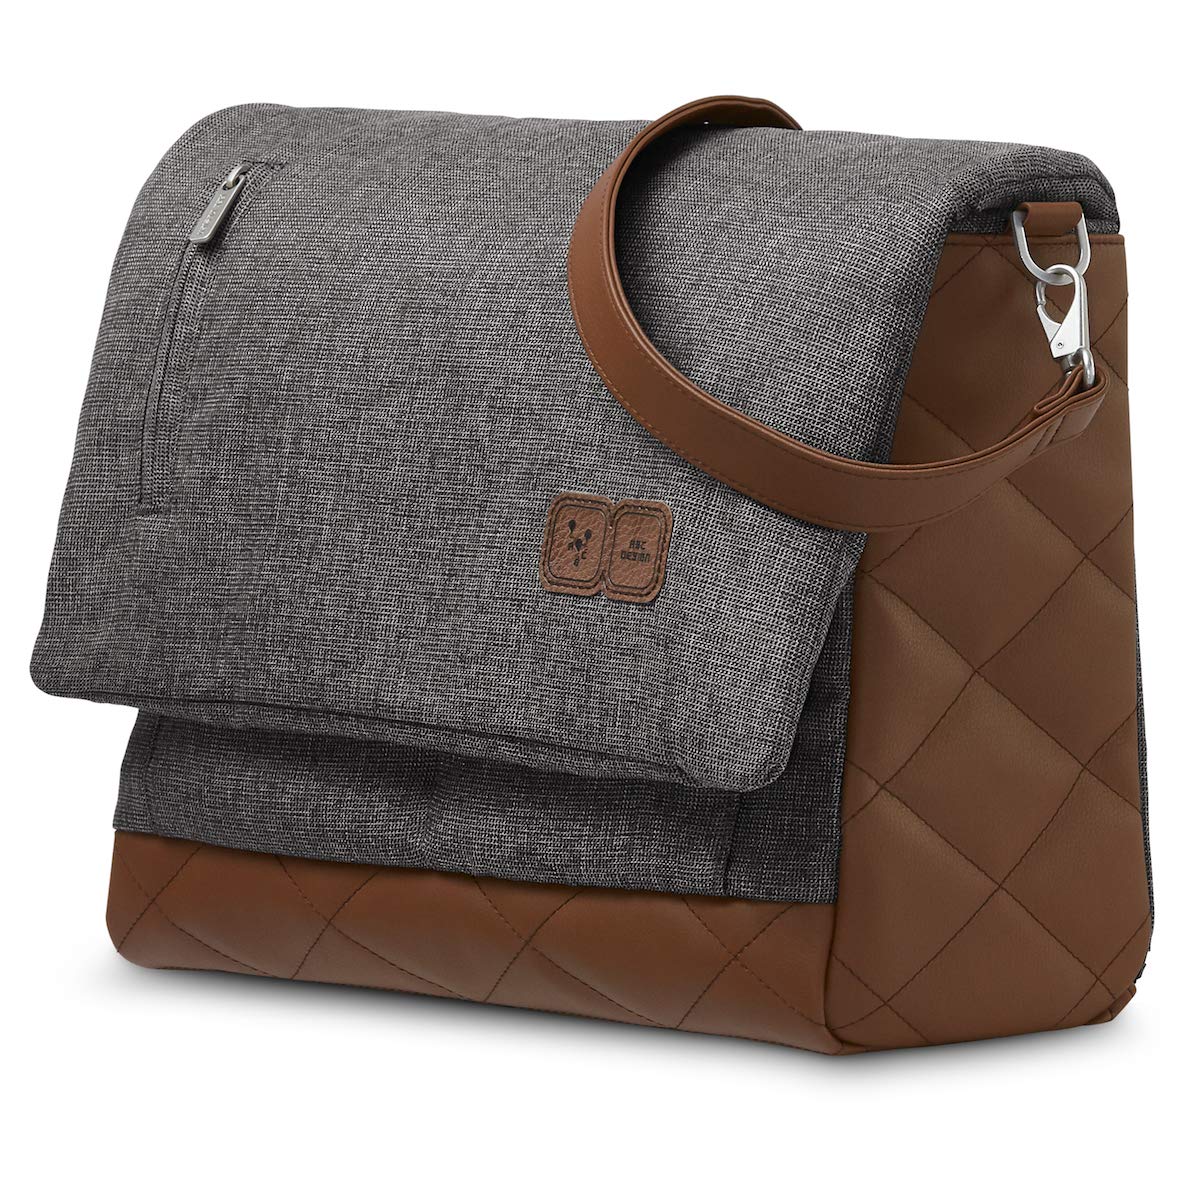 ABC Design Urban Changing Bag - Crossbody Bag with Baby Accessories - Messenger Bag - Large Main Compartment - Wide Shoulder Strap - Polyester - Colour: Asphalt